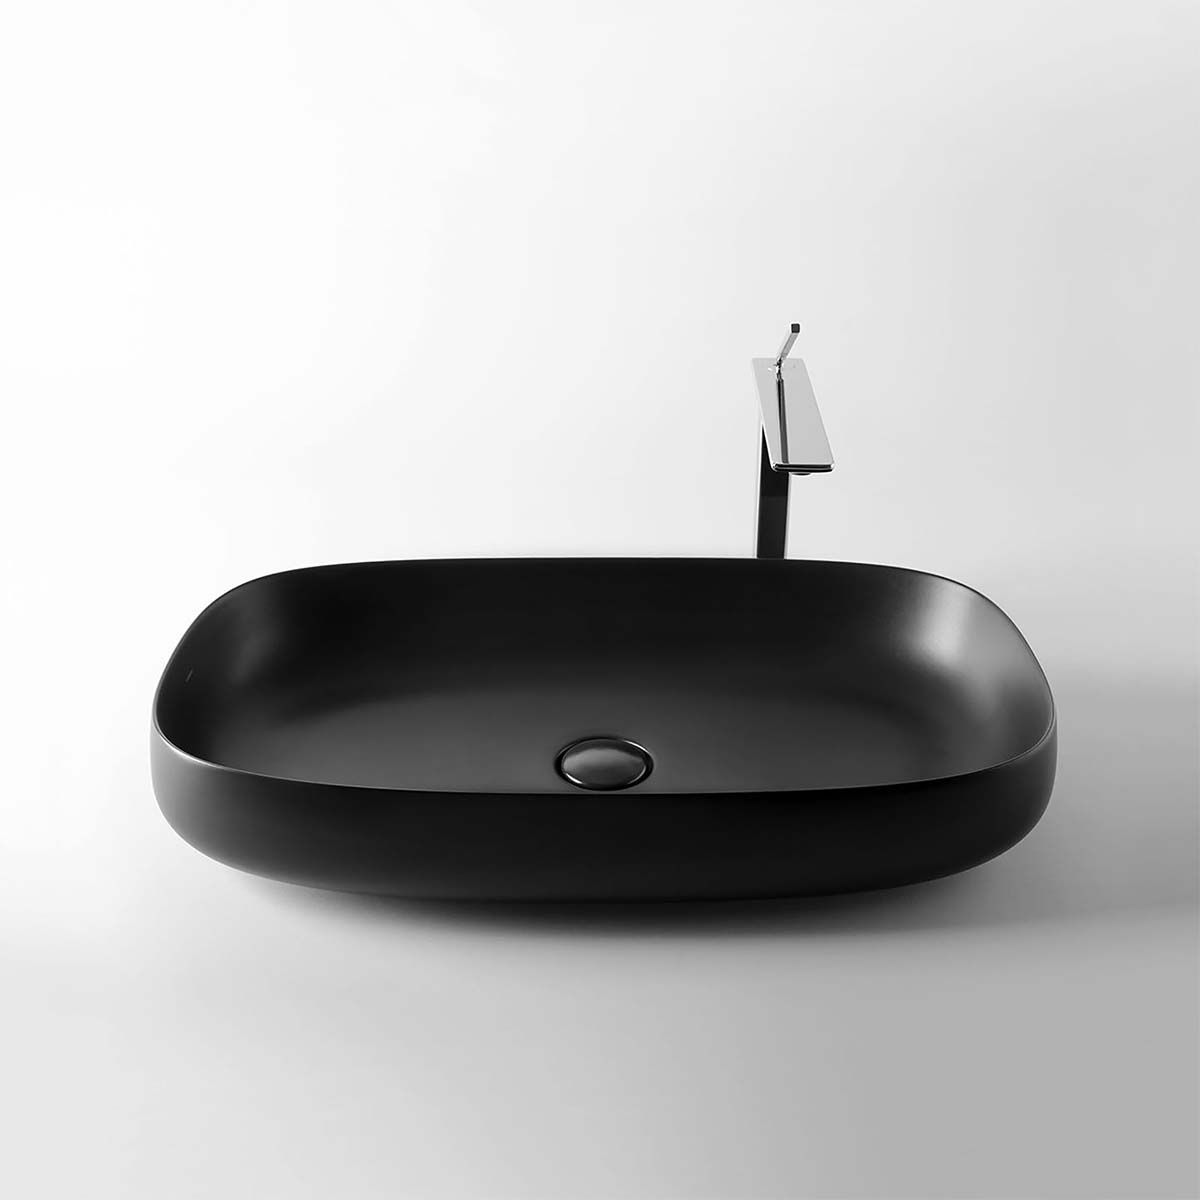 The Beginning of the Modern Bathroom Design - Seed Vessel Sink